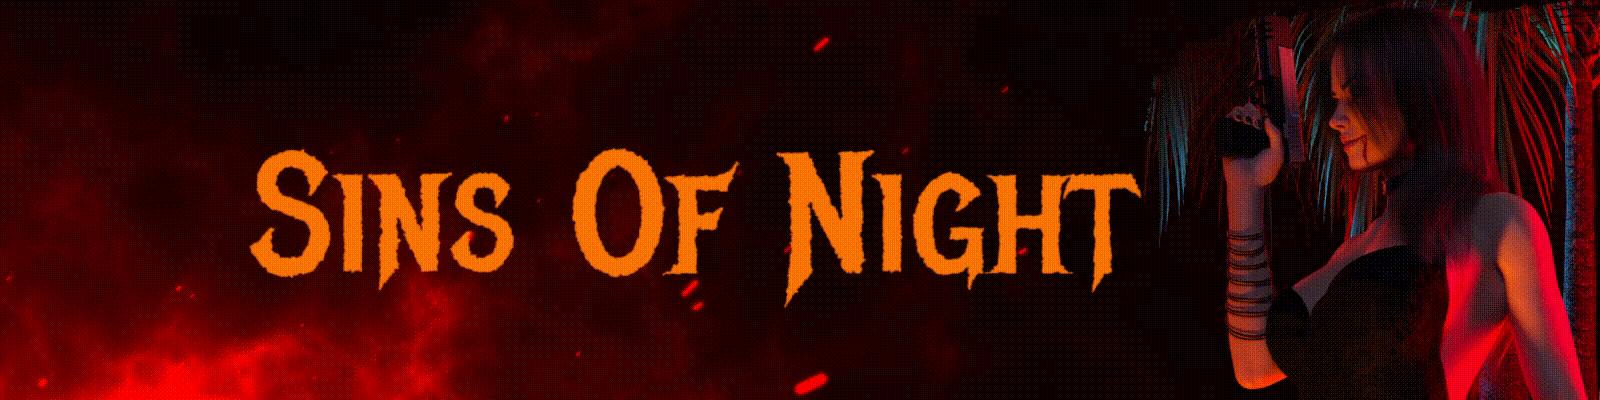 Sins Of Night1.gif